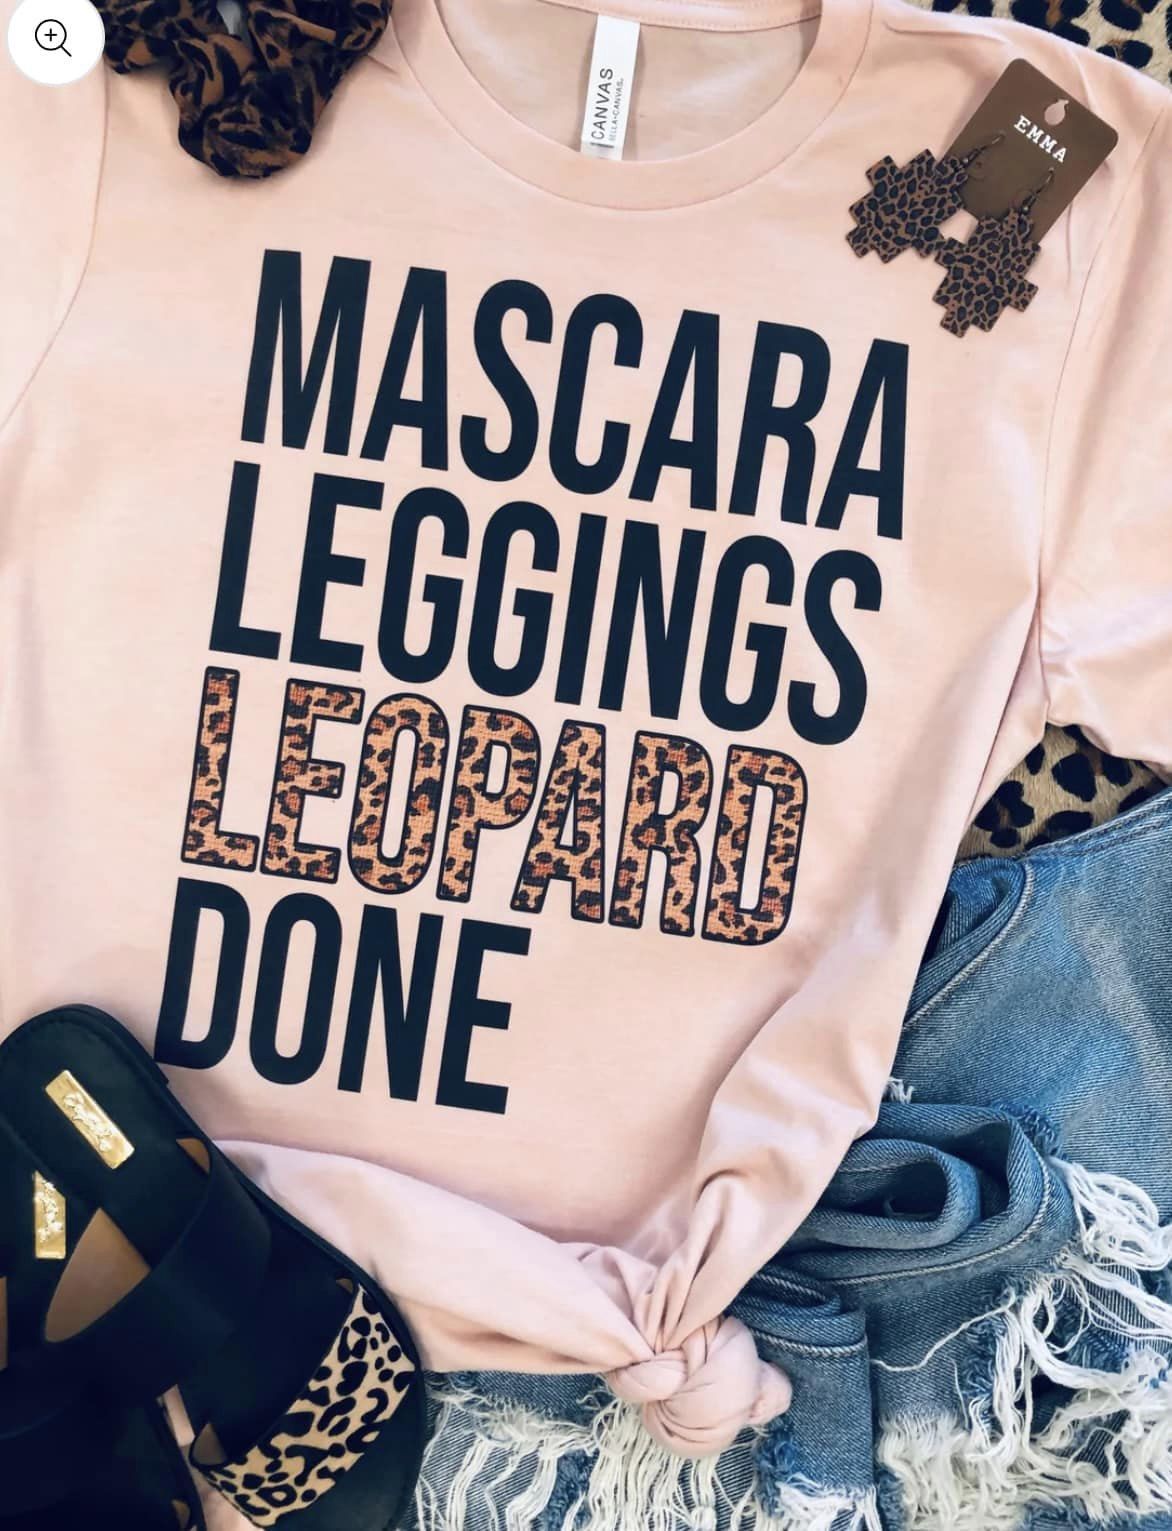 Mascara, Leggings, Leopard Graphic Tee